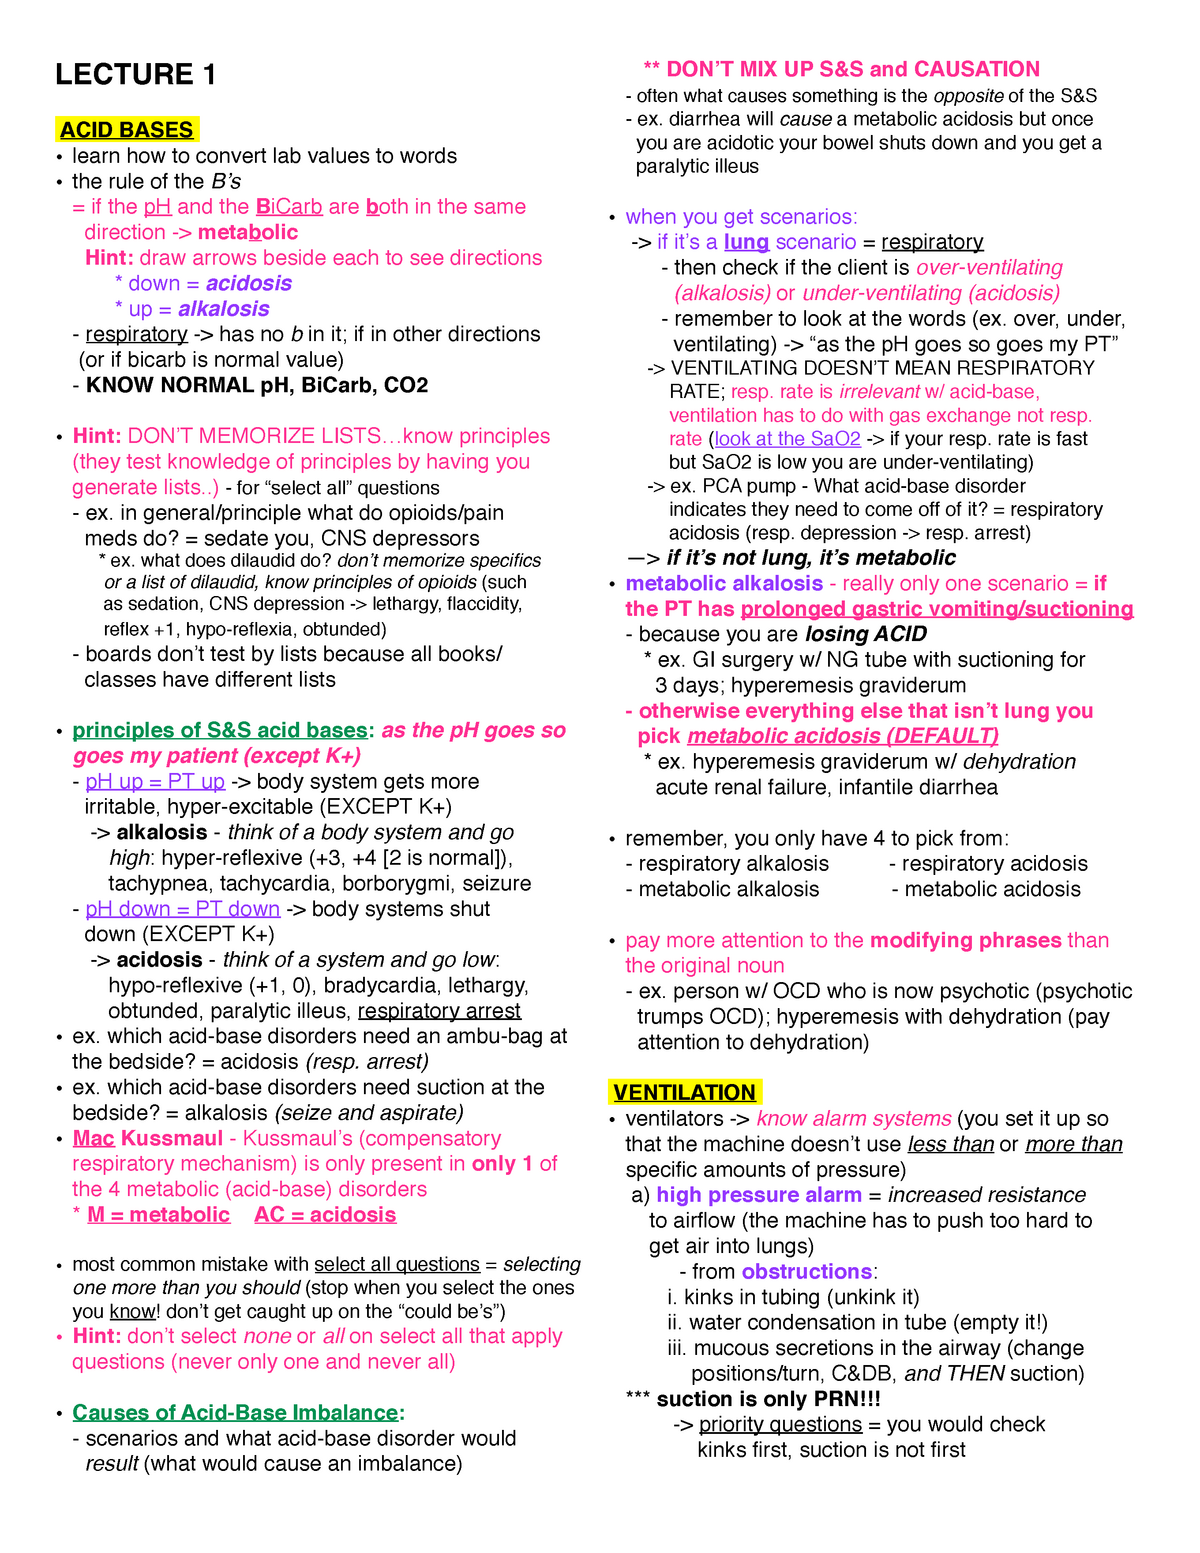 PDF Mark K Nclex Study Guide Outline format for 2021 NCLEX exam